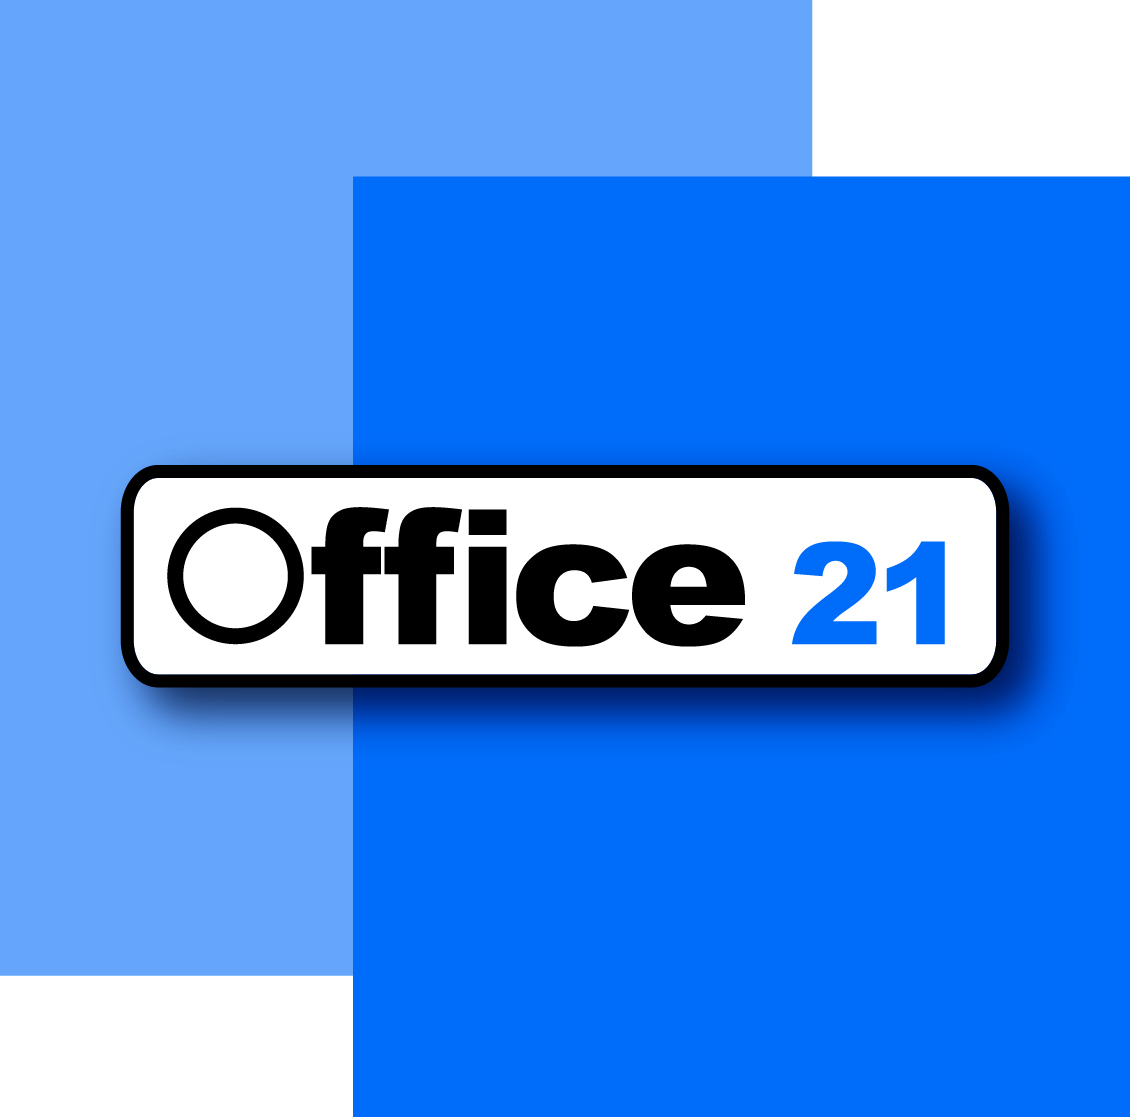 OFFICE 21